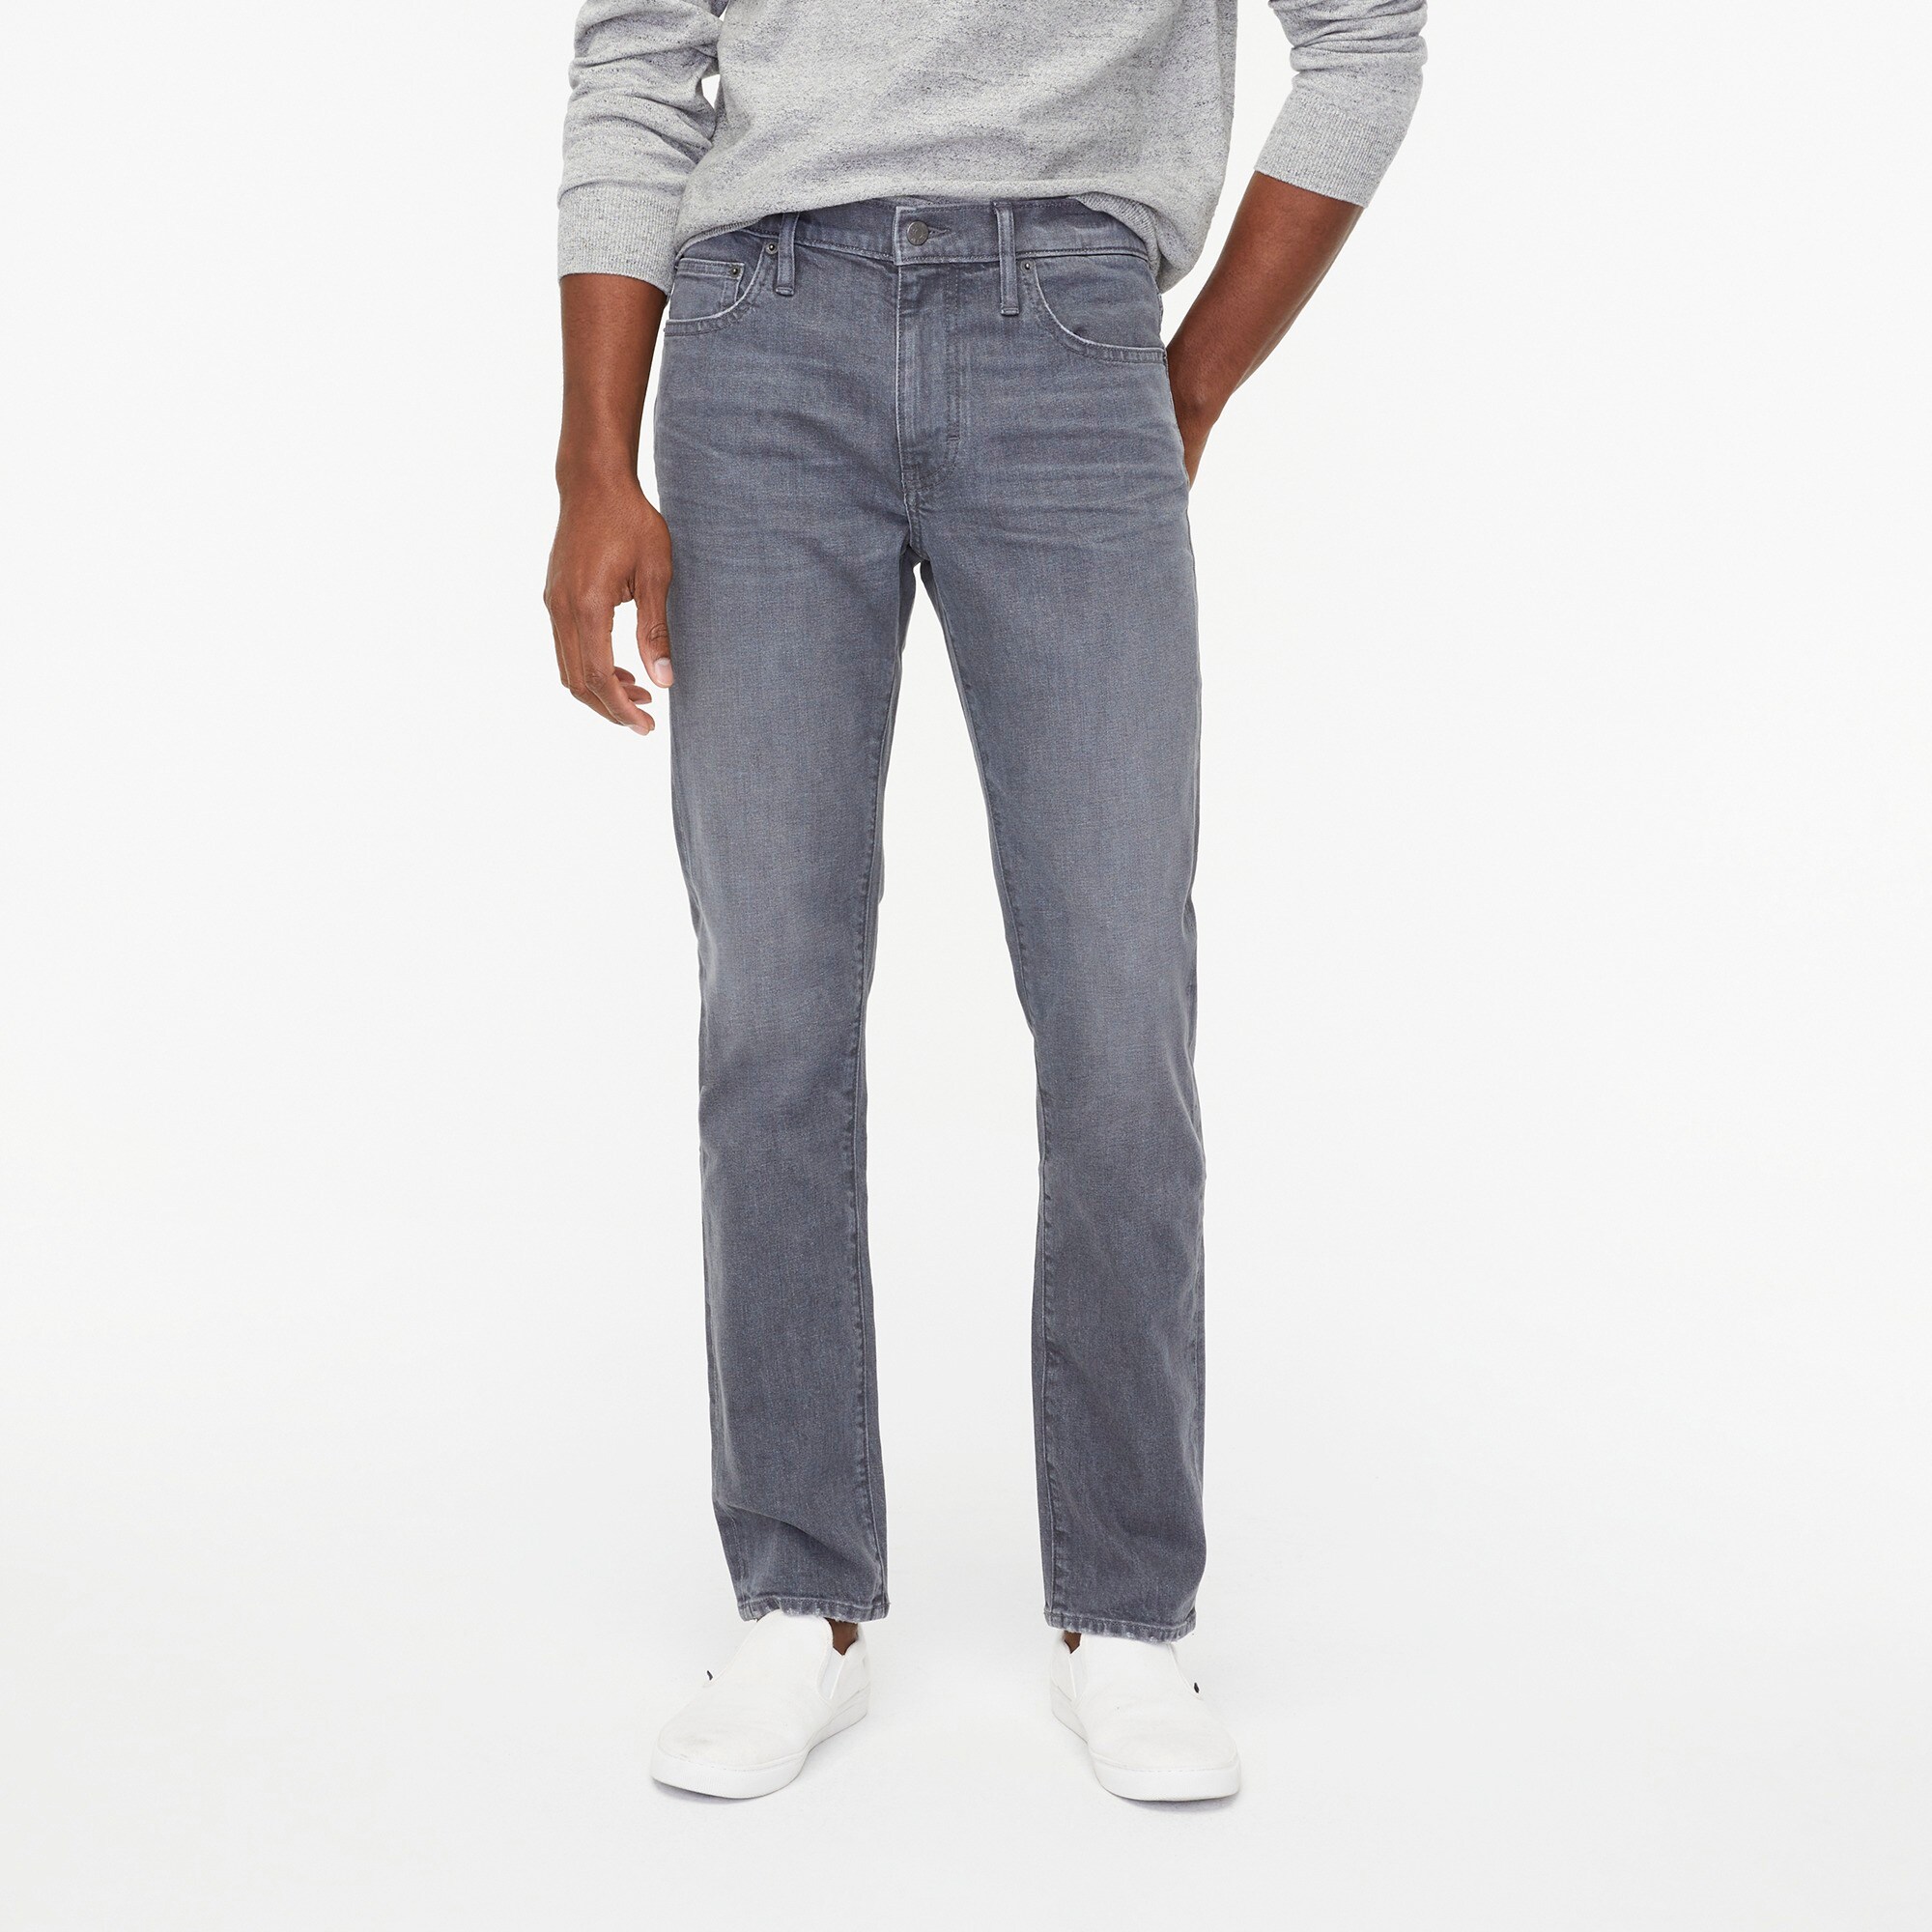 mens Straight-fit grey jean in signature flex